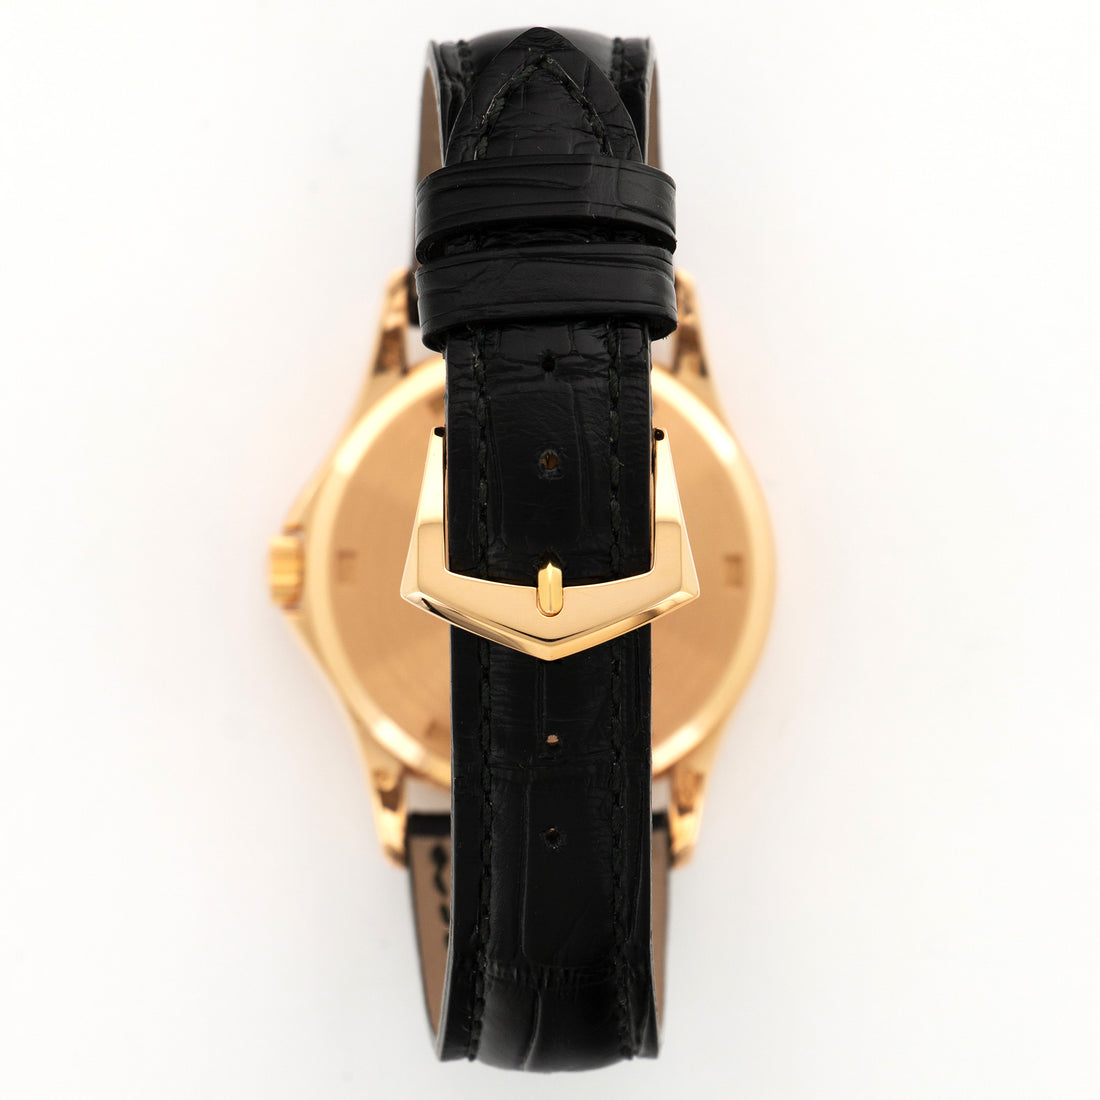 Patek Philippe Rose Gold Calatrava Enamel Dial Watch Ref. 5115